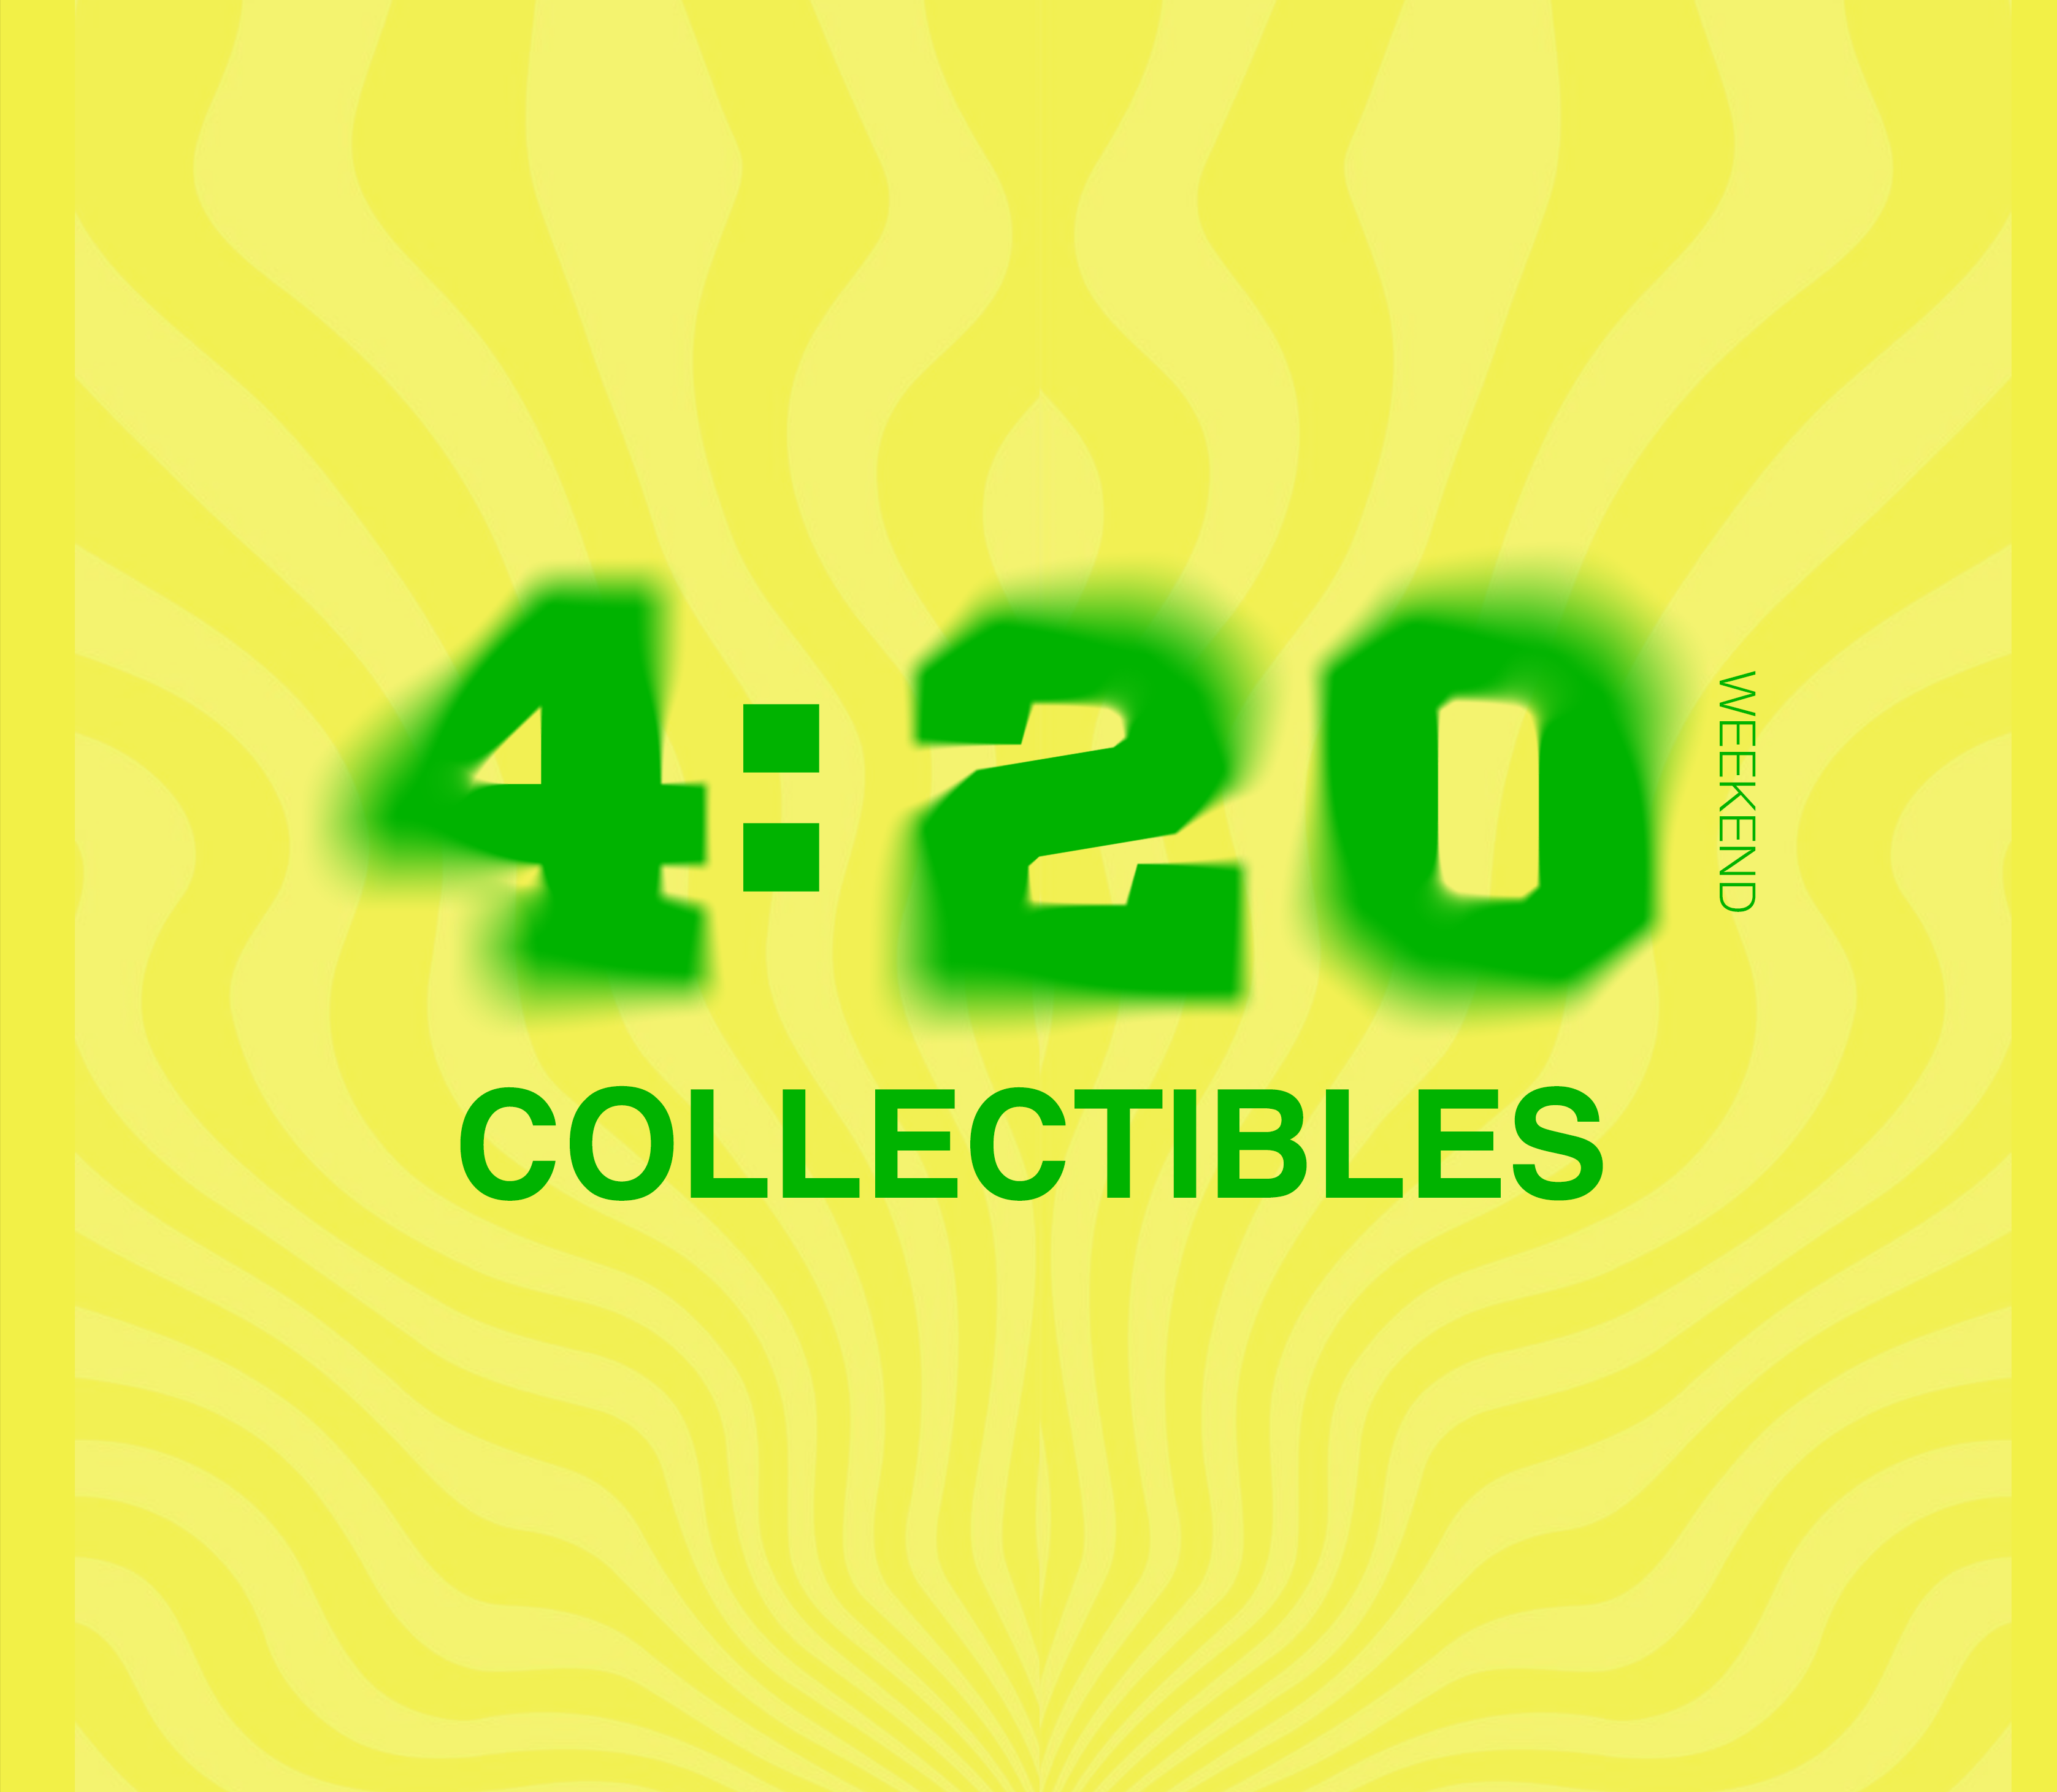 420 COLLECTIBLES